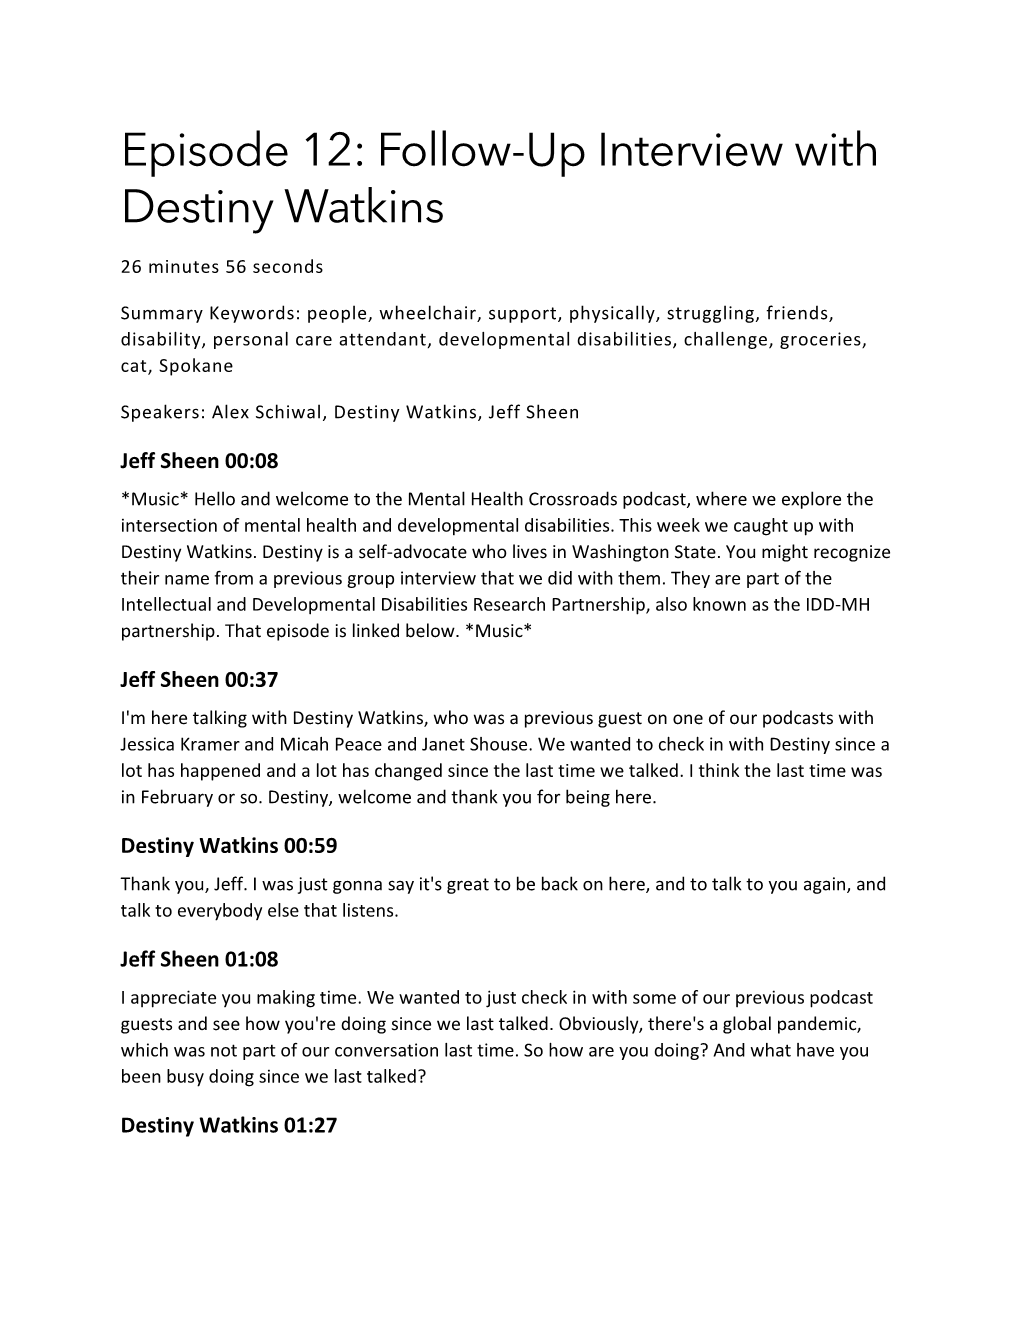 Episode 12: Follow-Up Interview with Destiny Watkins